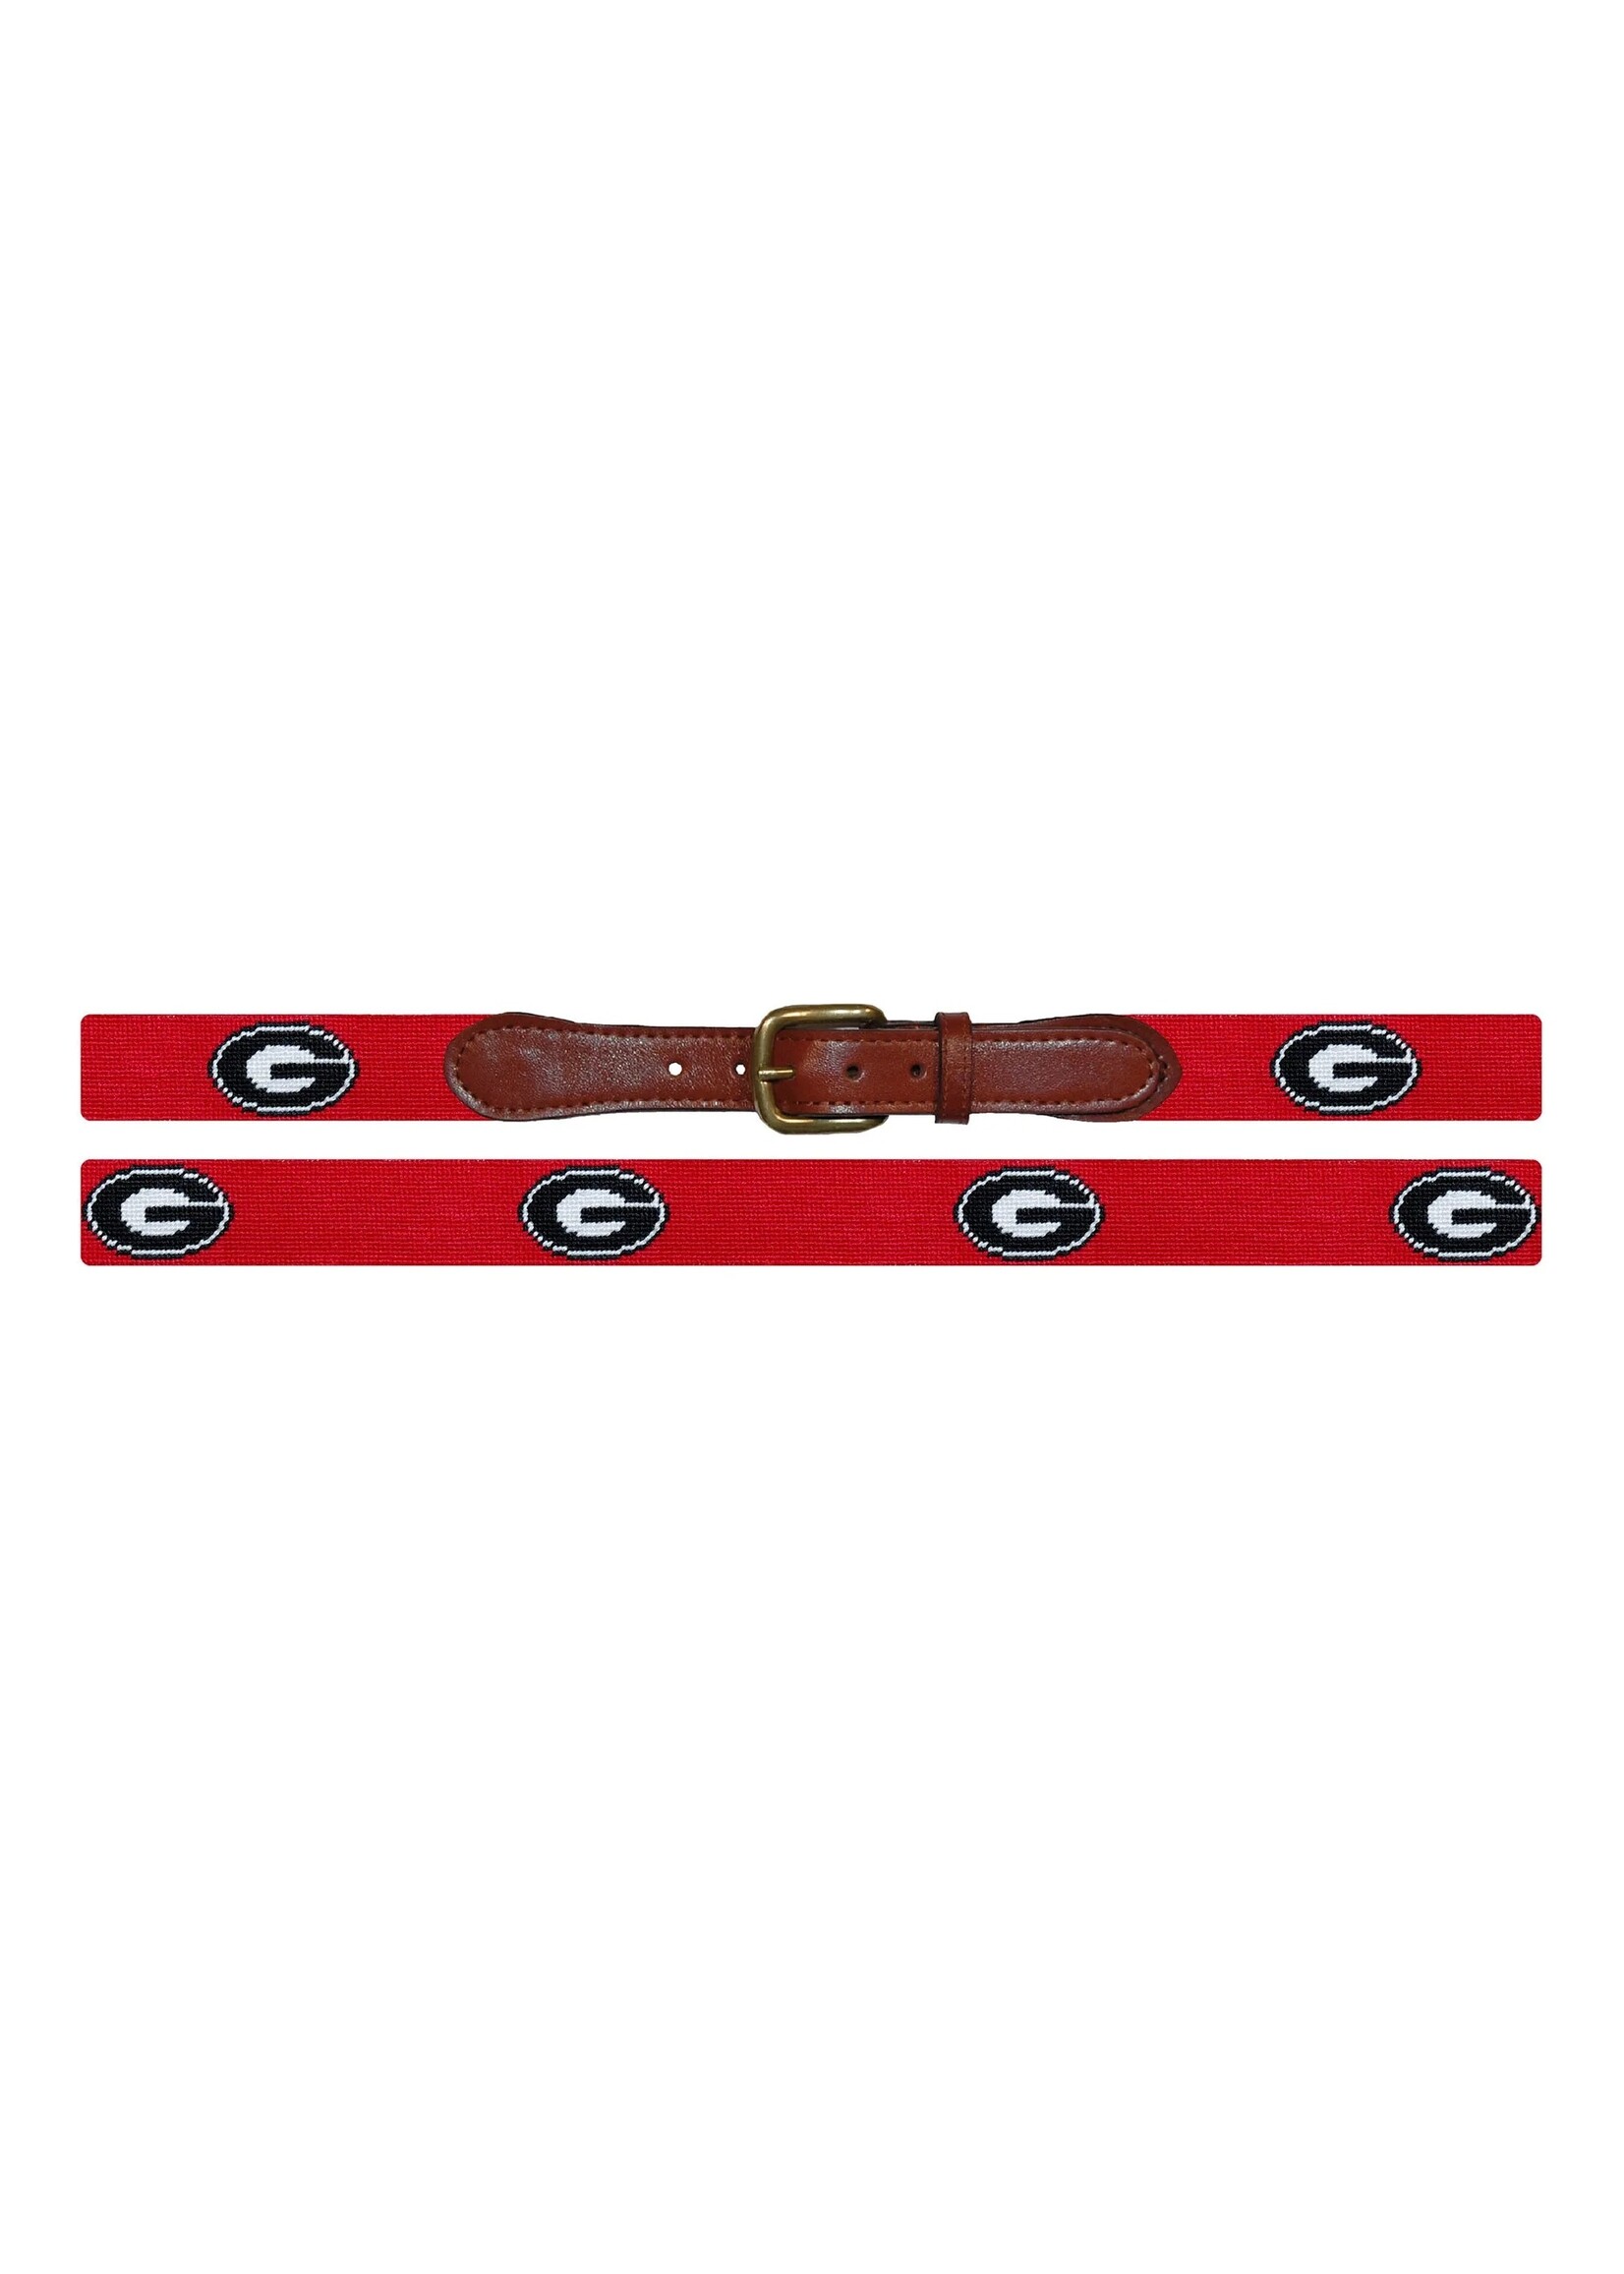 Smathers & Branson Needlepoint Georgia G (Red) Belt